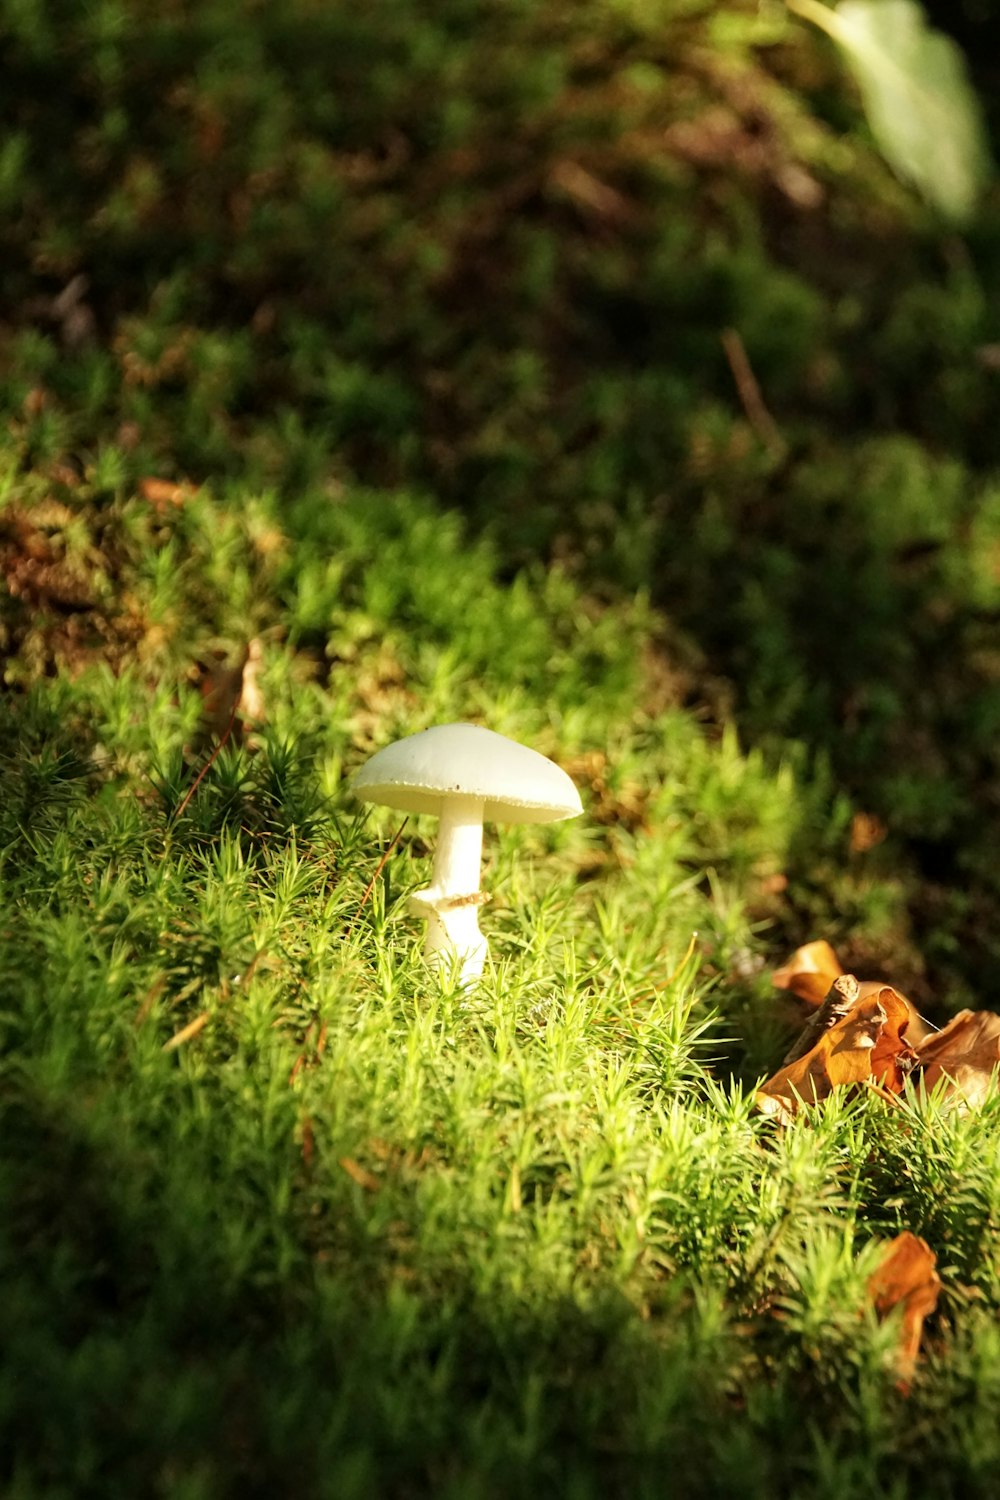 a white mushroom in the grass